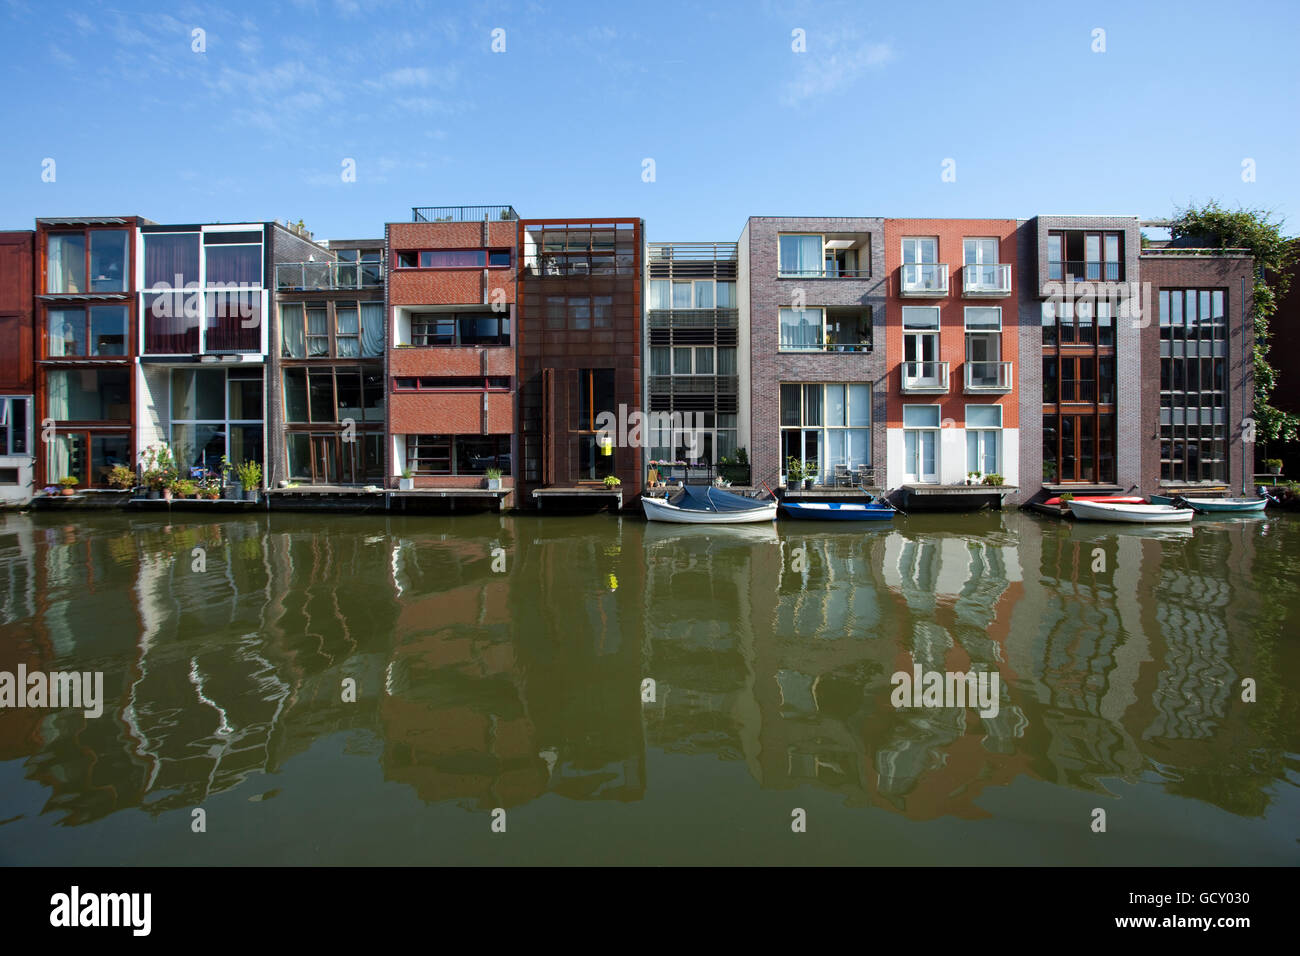 Modern canal houses on Borneo island, Amsterdam, Holland region, Netherlands, Europe Stock Photo